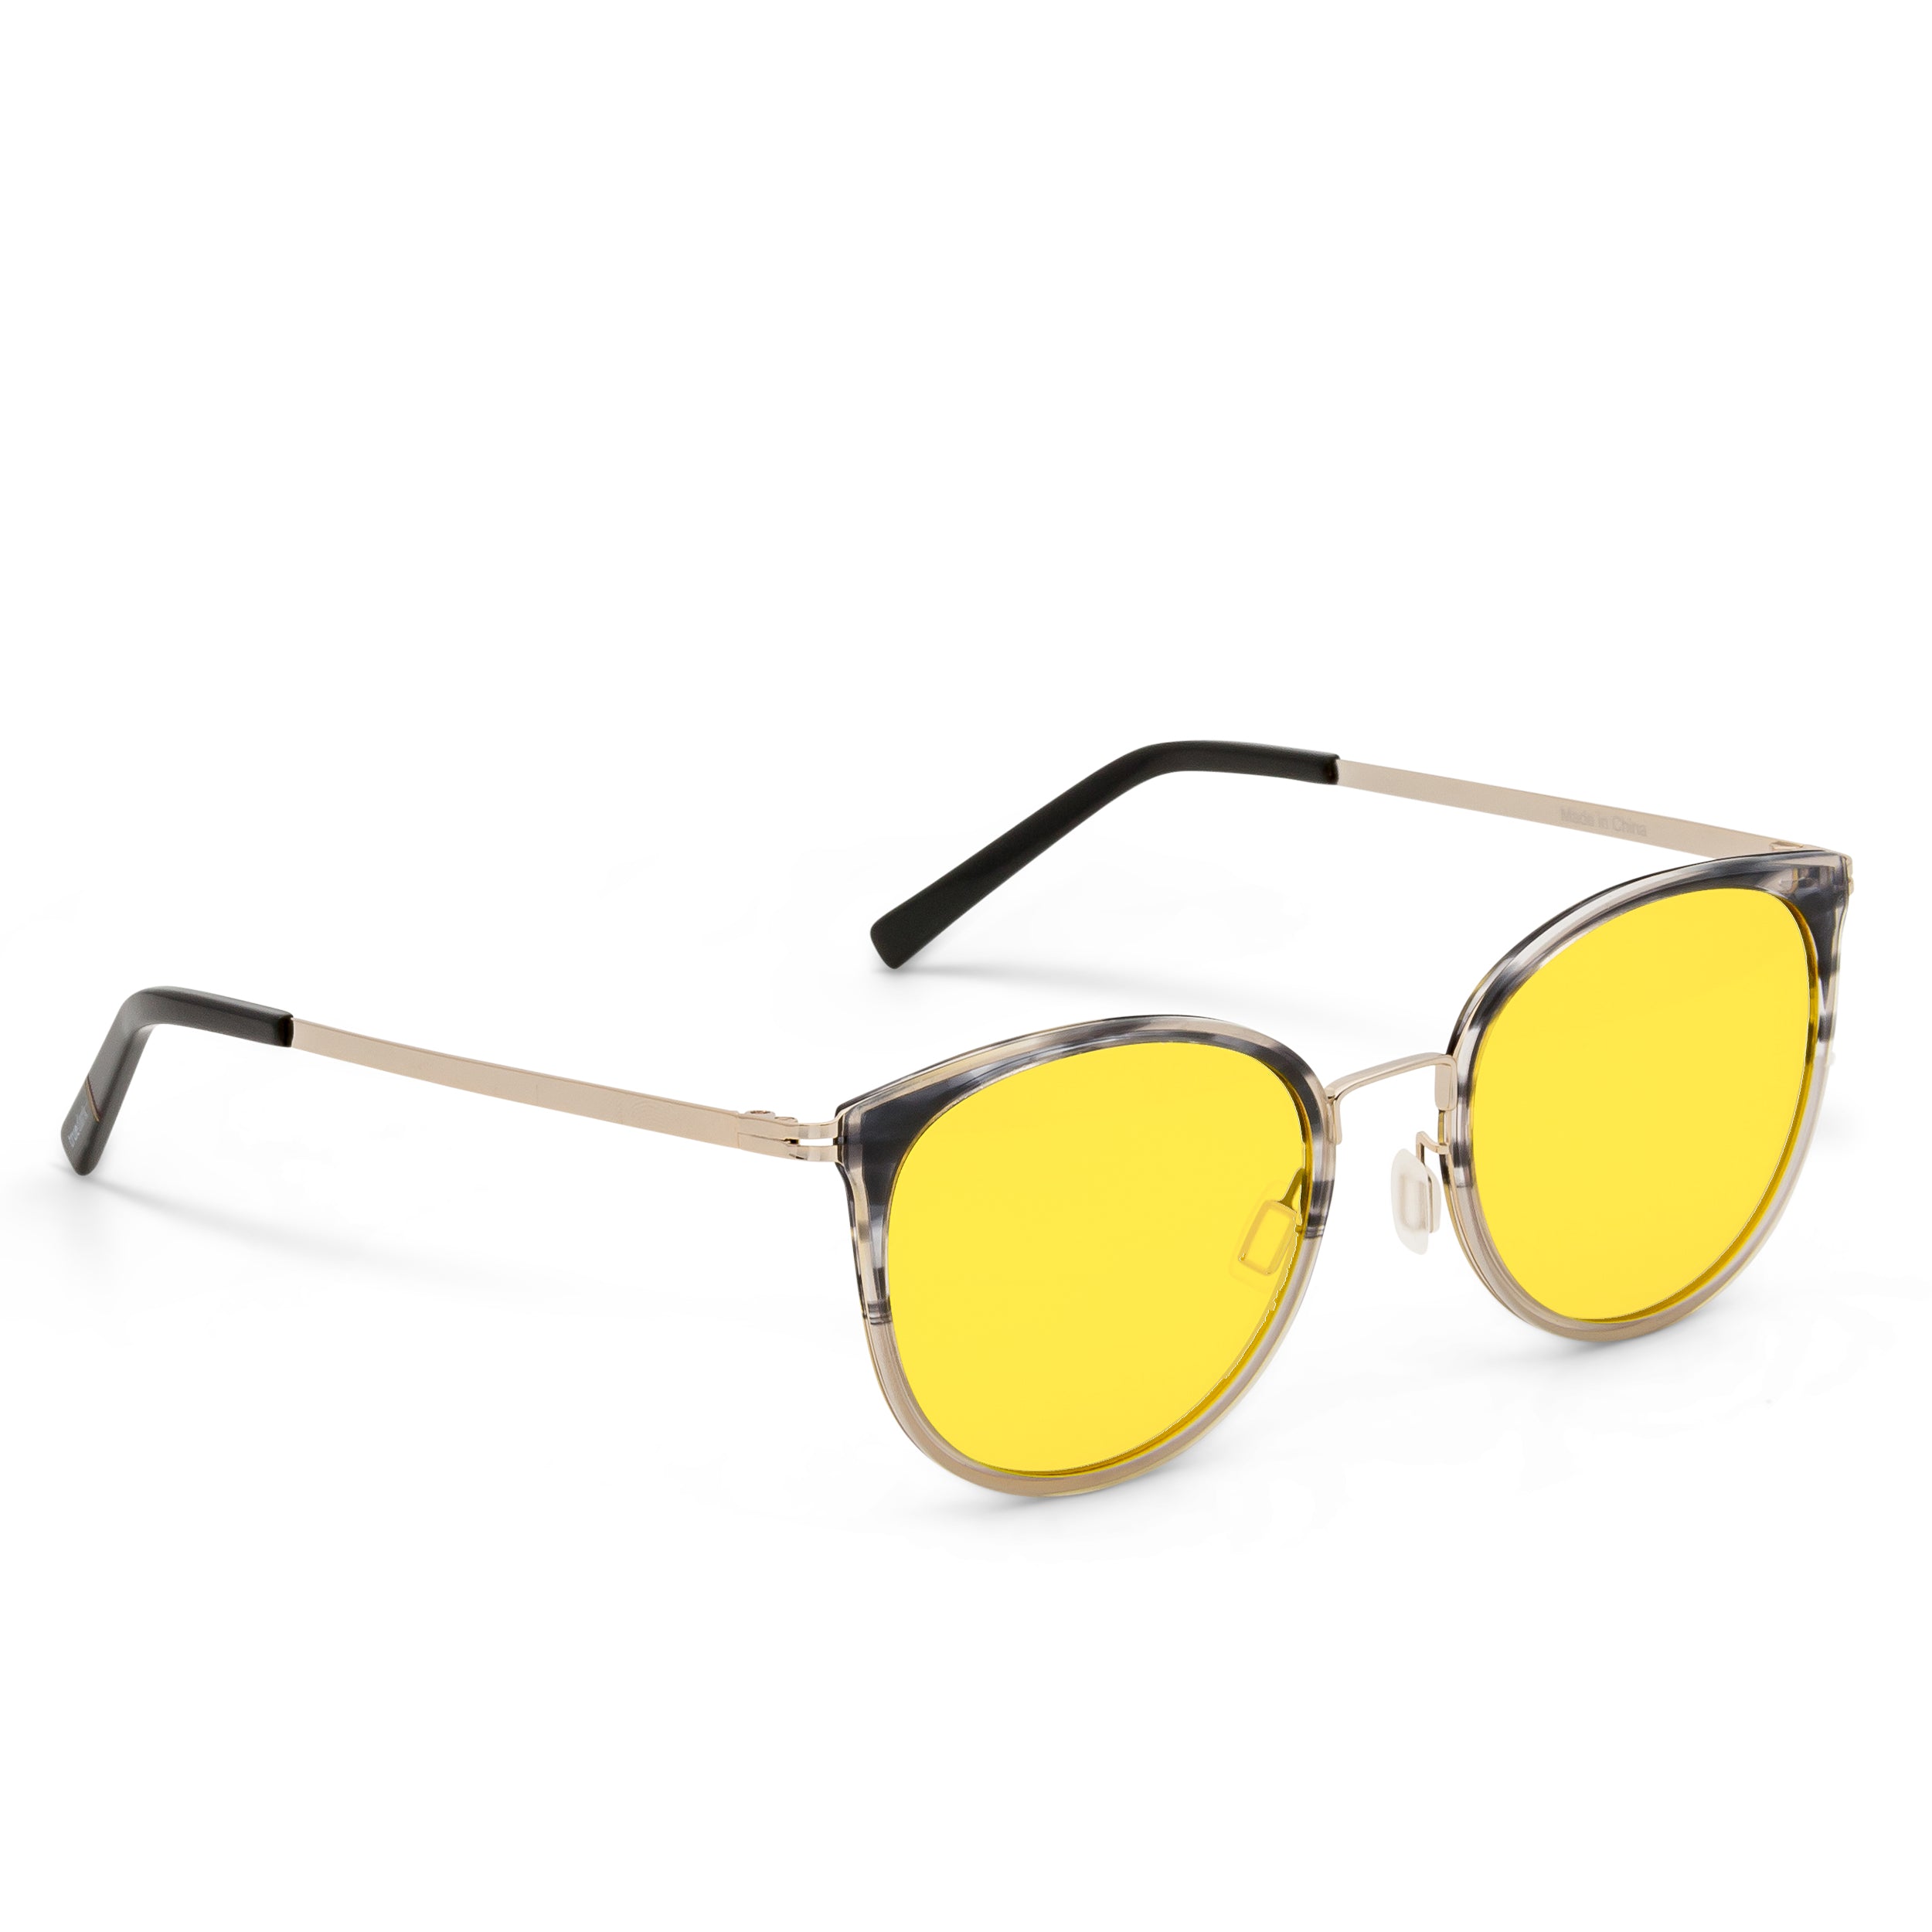 Truedark Daylight Malibu Sunglasses - Lifestyle Markets